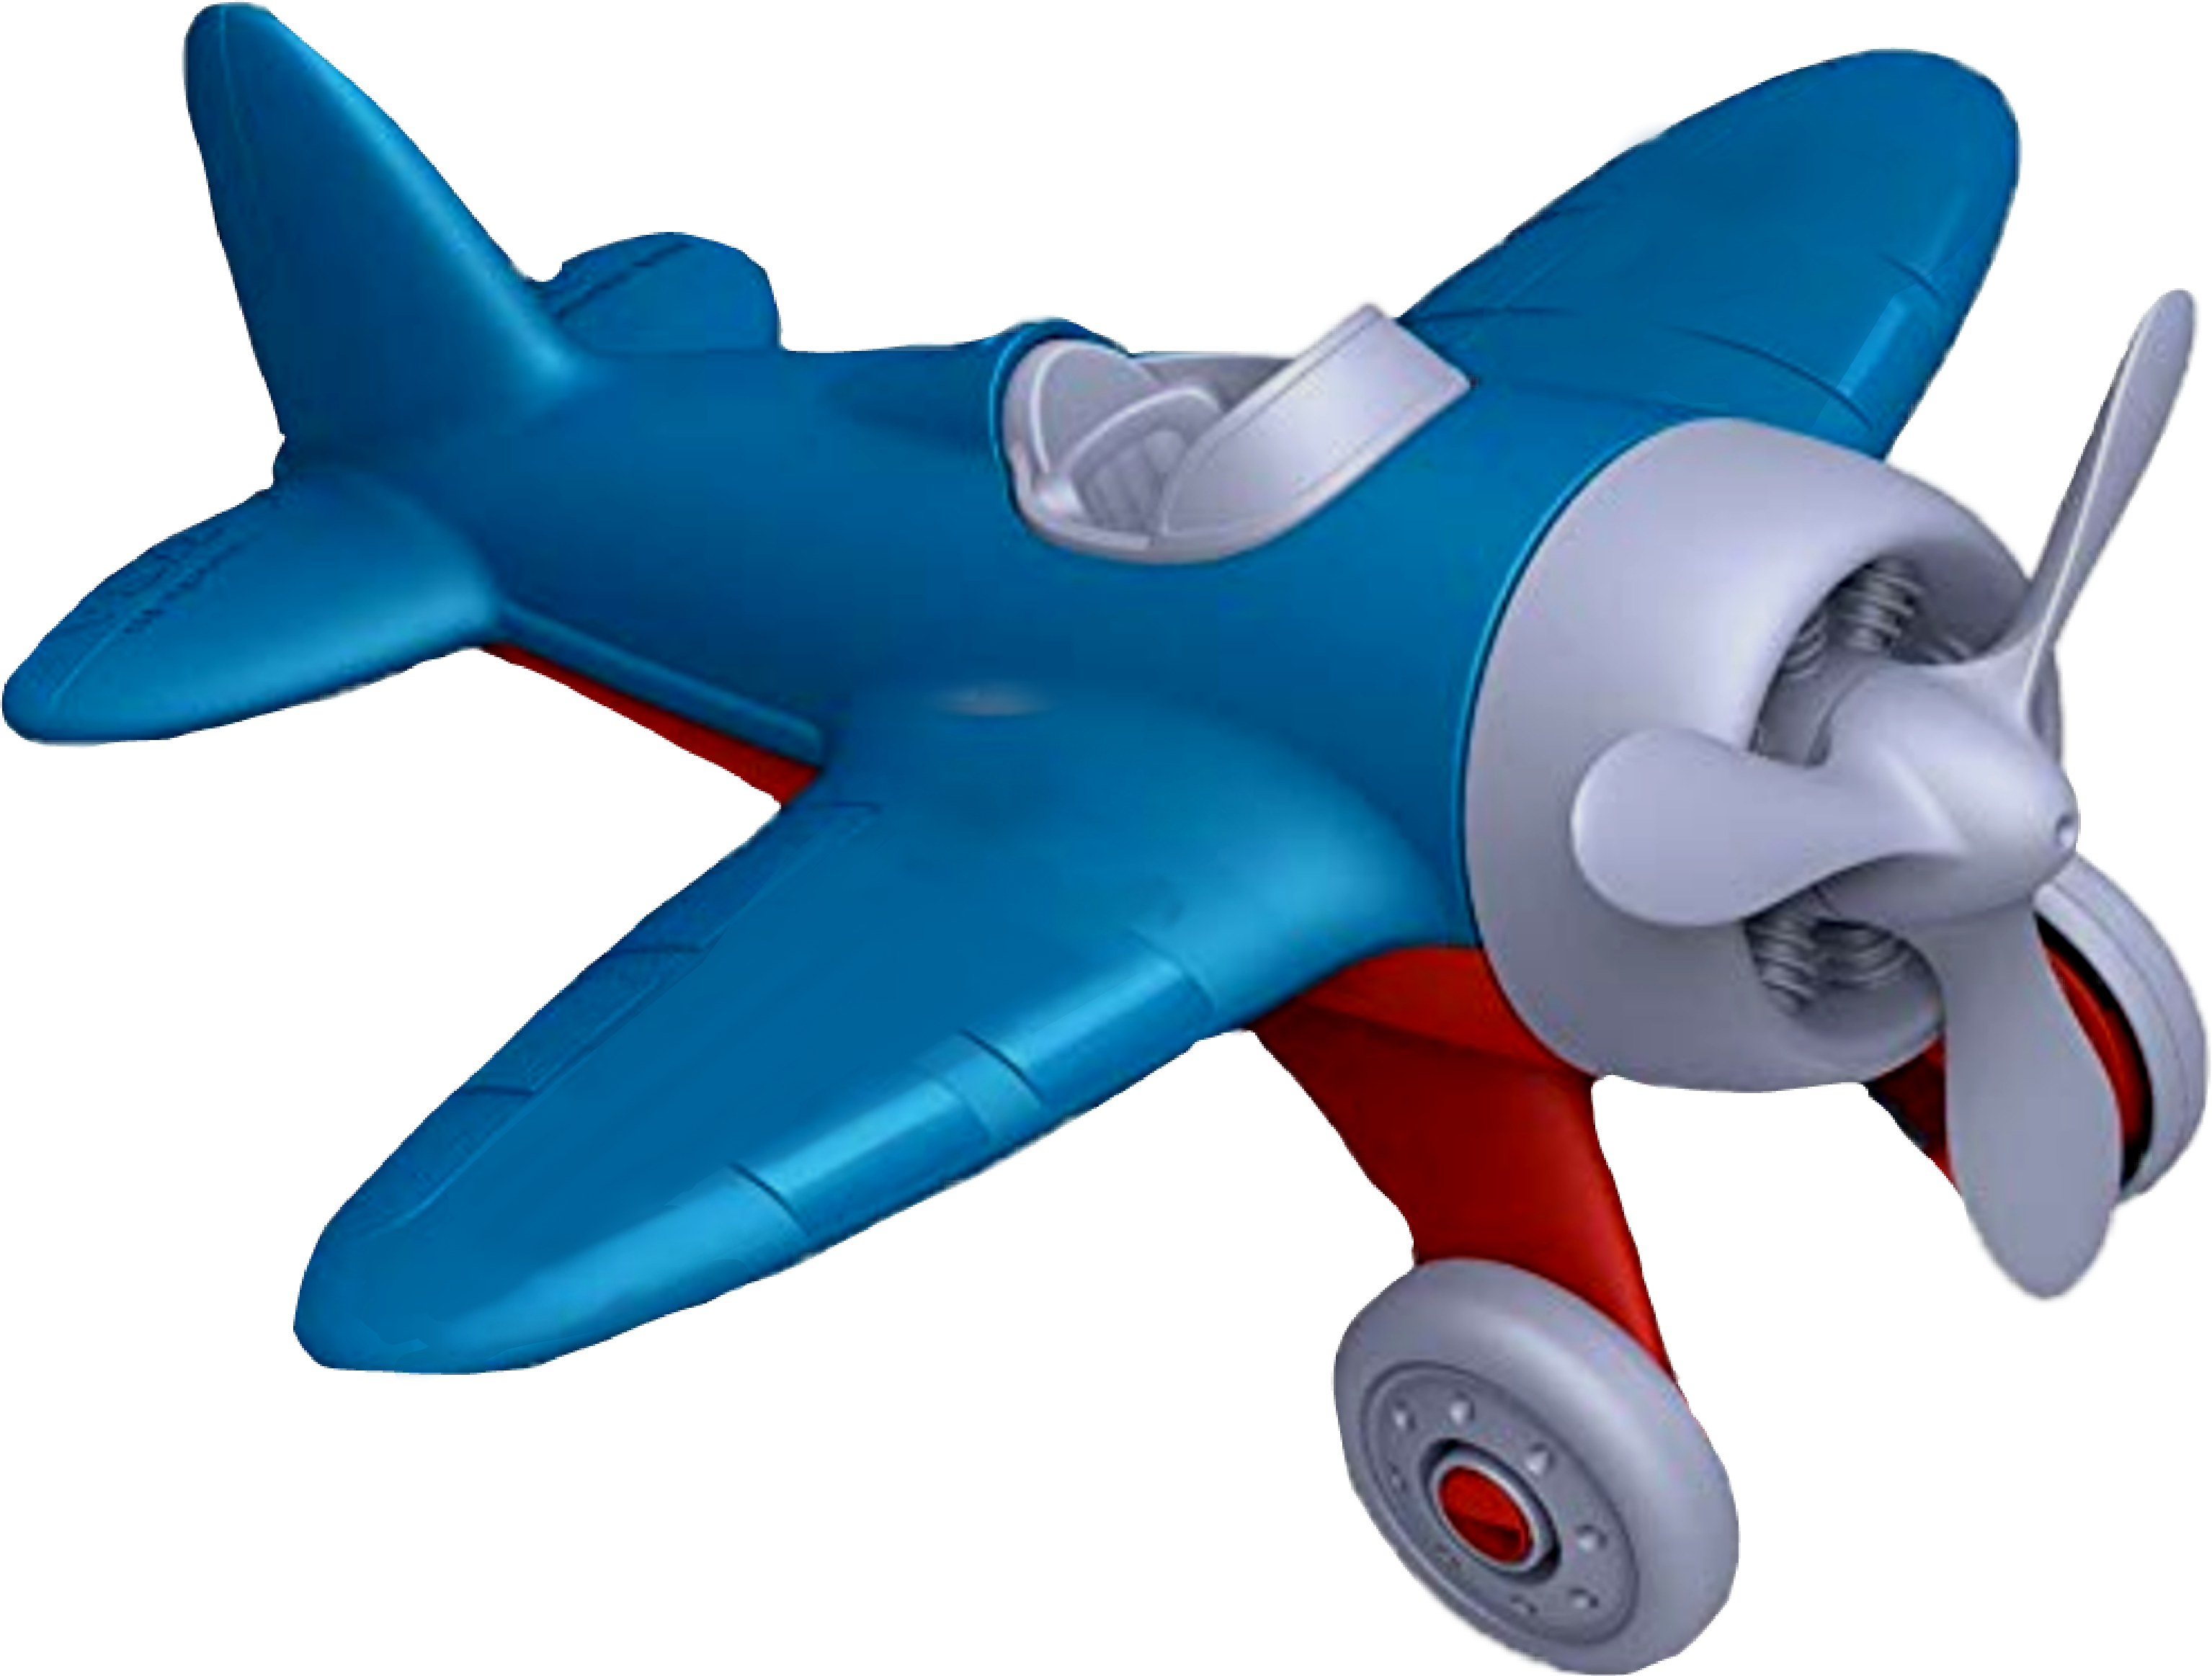 Игрушка "самолет". Игрушечный самолетик. Самолет детский. Детские самолеты игрушки.